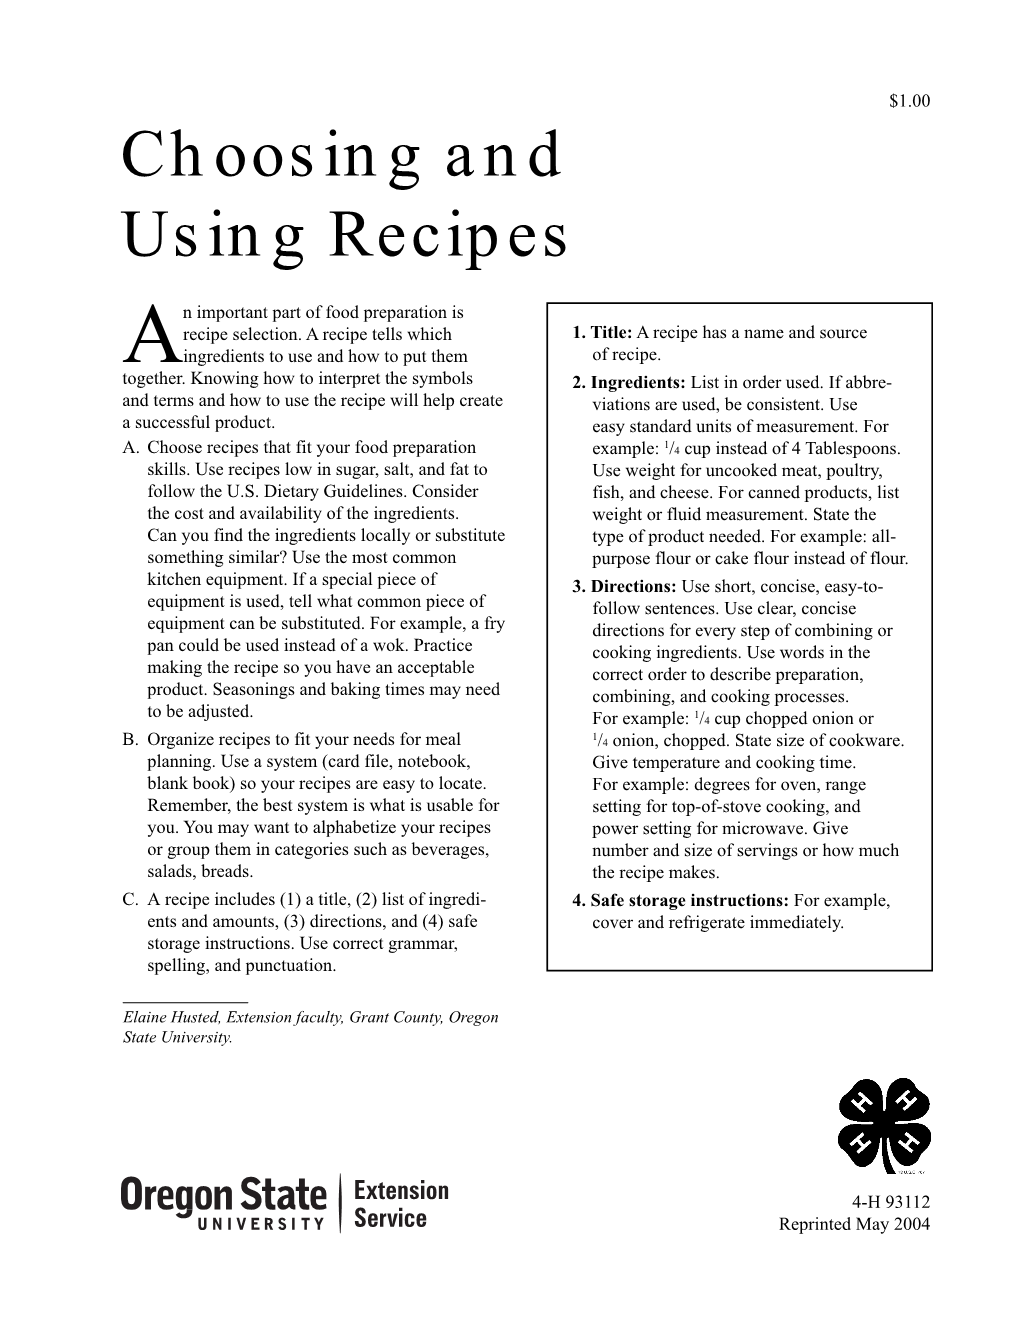 Choosing and Using Recipes